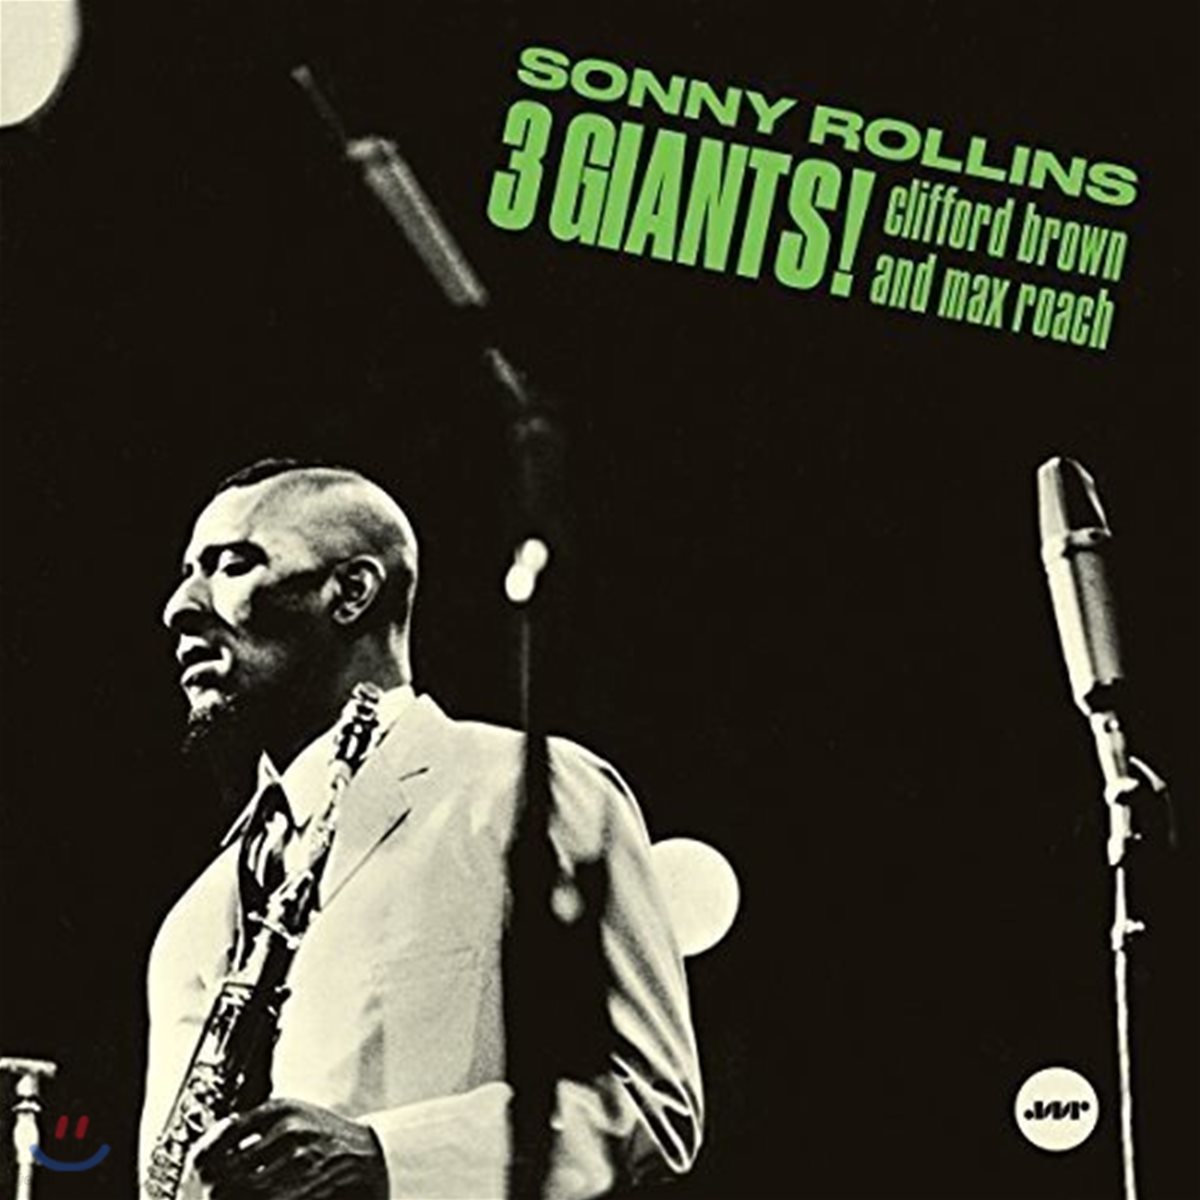 Sonny Rollins / Clifford Brown / Max Roach - 3 Giants 소니 롤린스, 클리포드 브라운 & 맥스 로치 [LP]